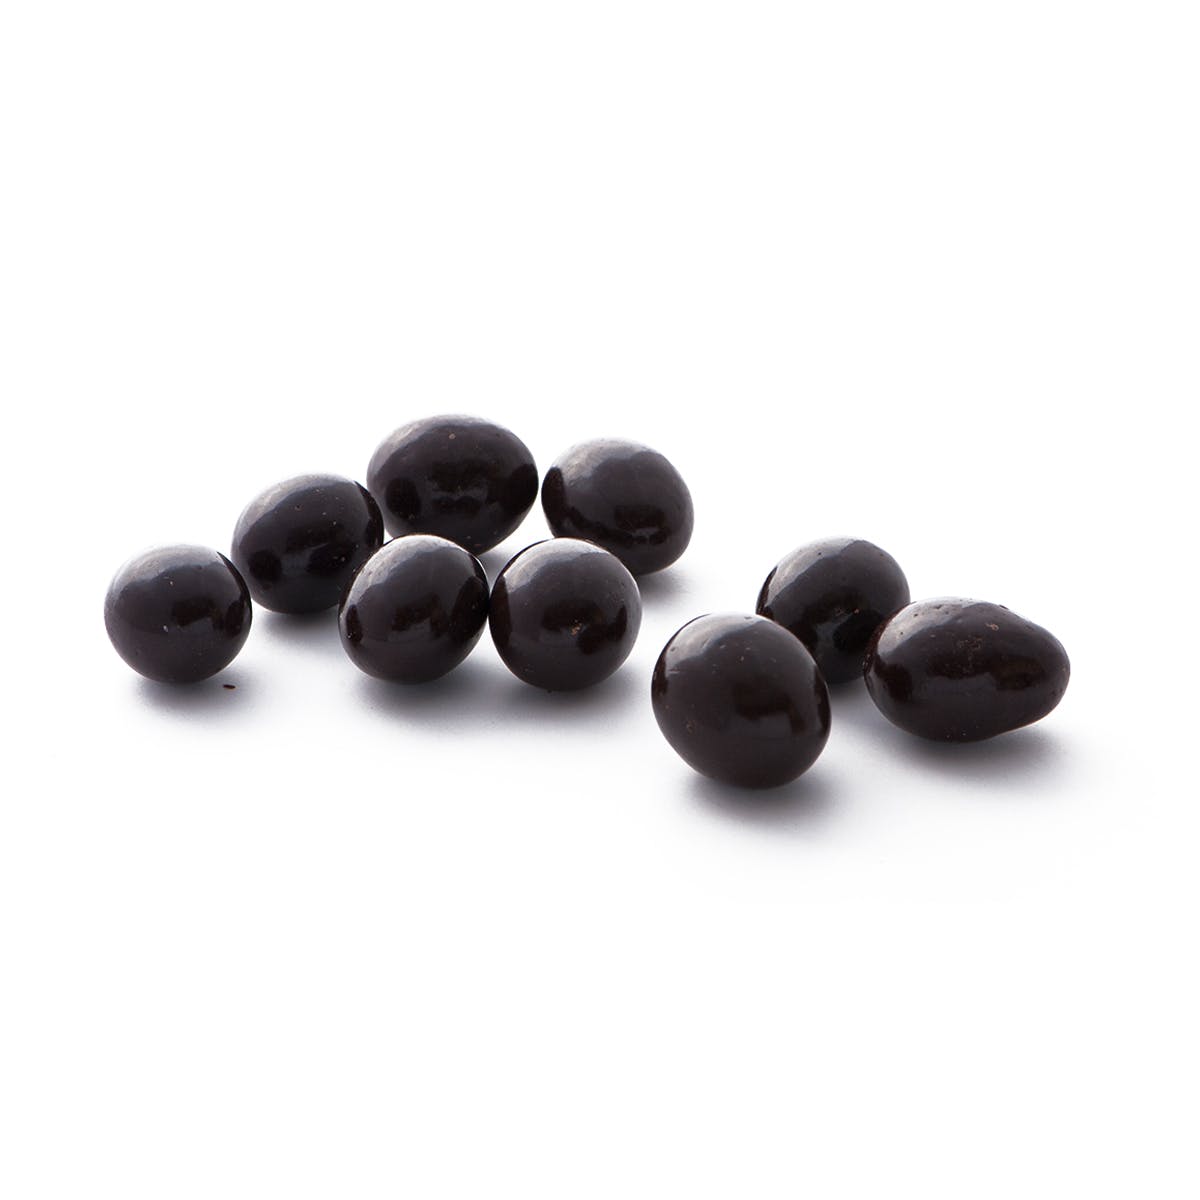 edible-sweet-jane-edibles-dark-chocolate-covered-almonds-2c-150mg